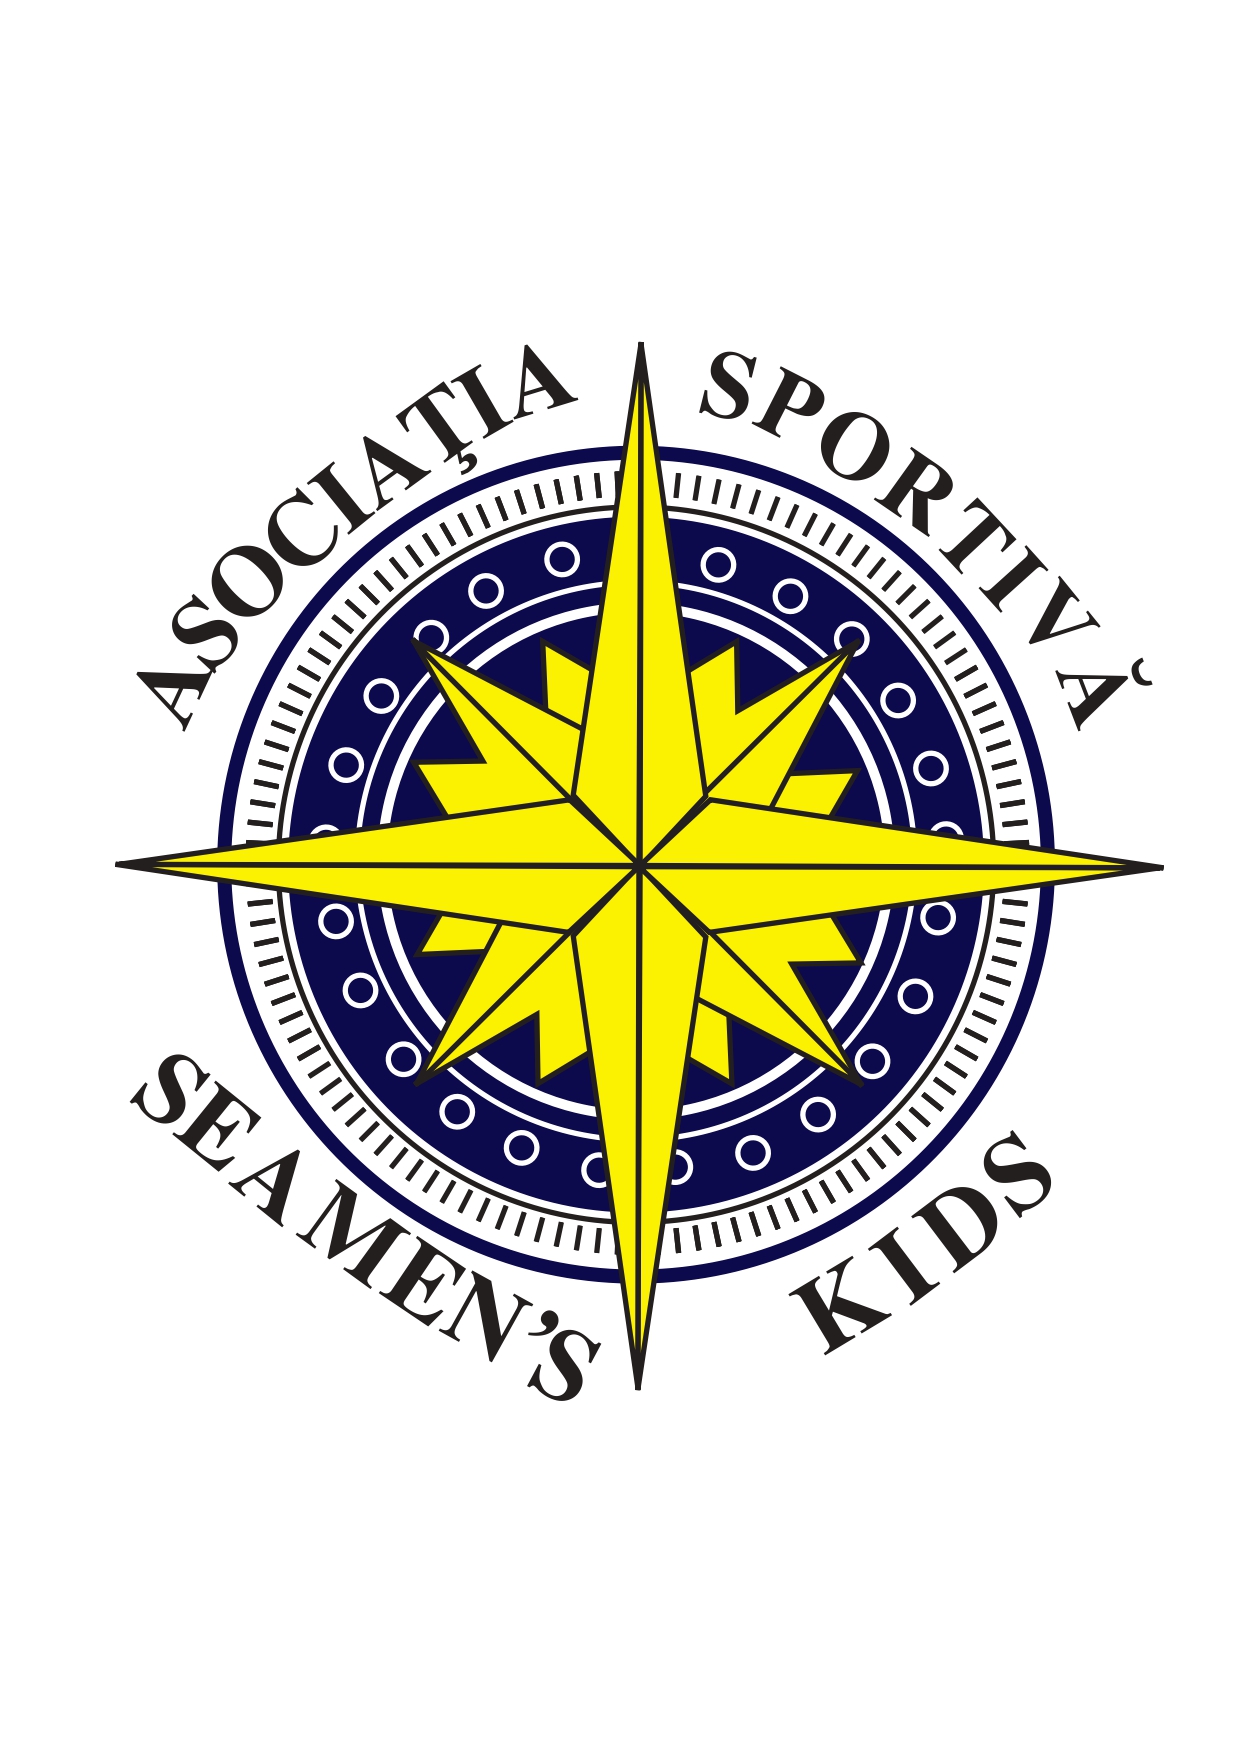 Asociatia Sportiva Seamen's Kids